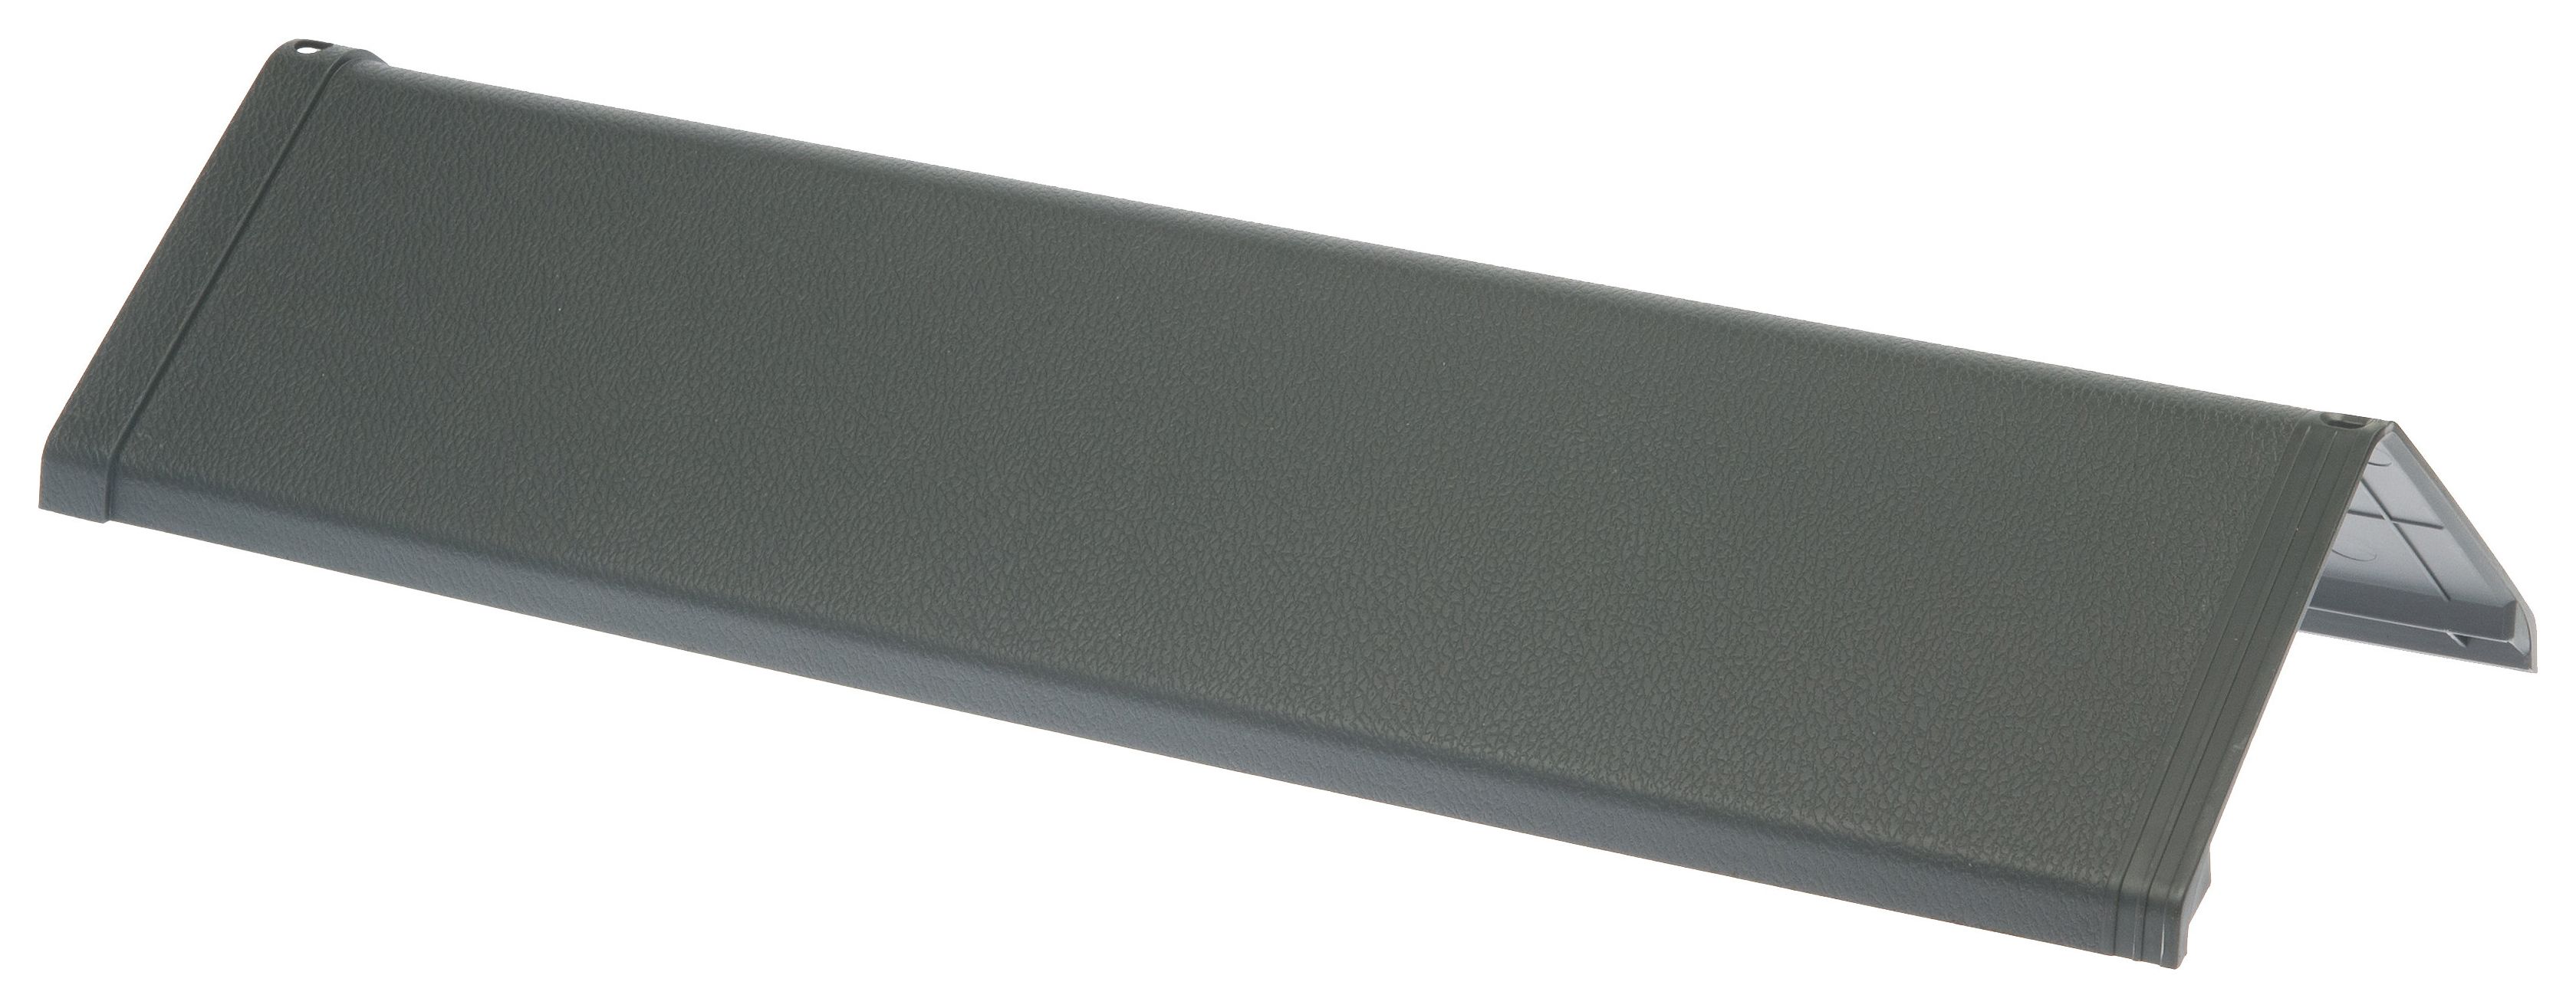 Image of Envirotile Grey Hip Cap - 425 x 150 x 6mm